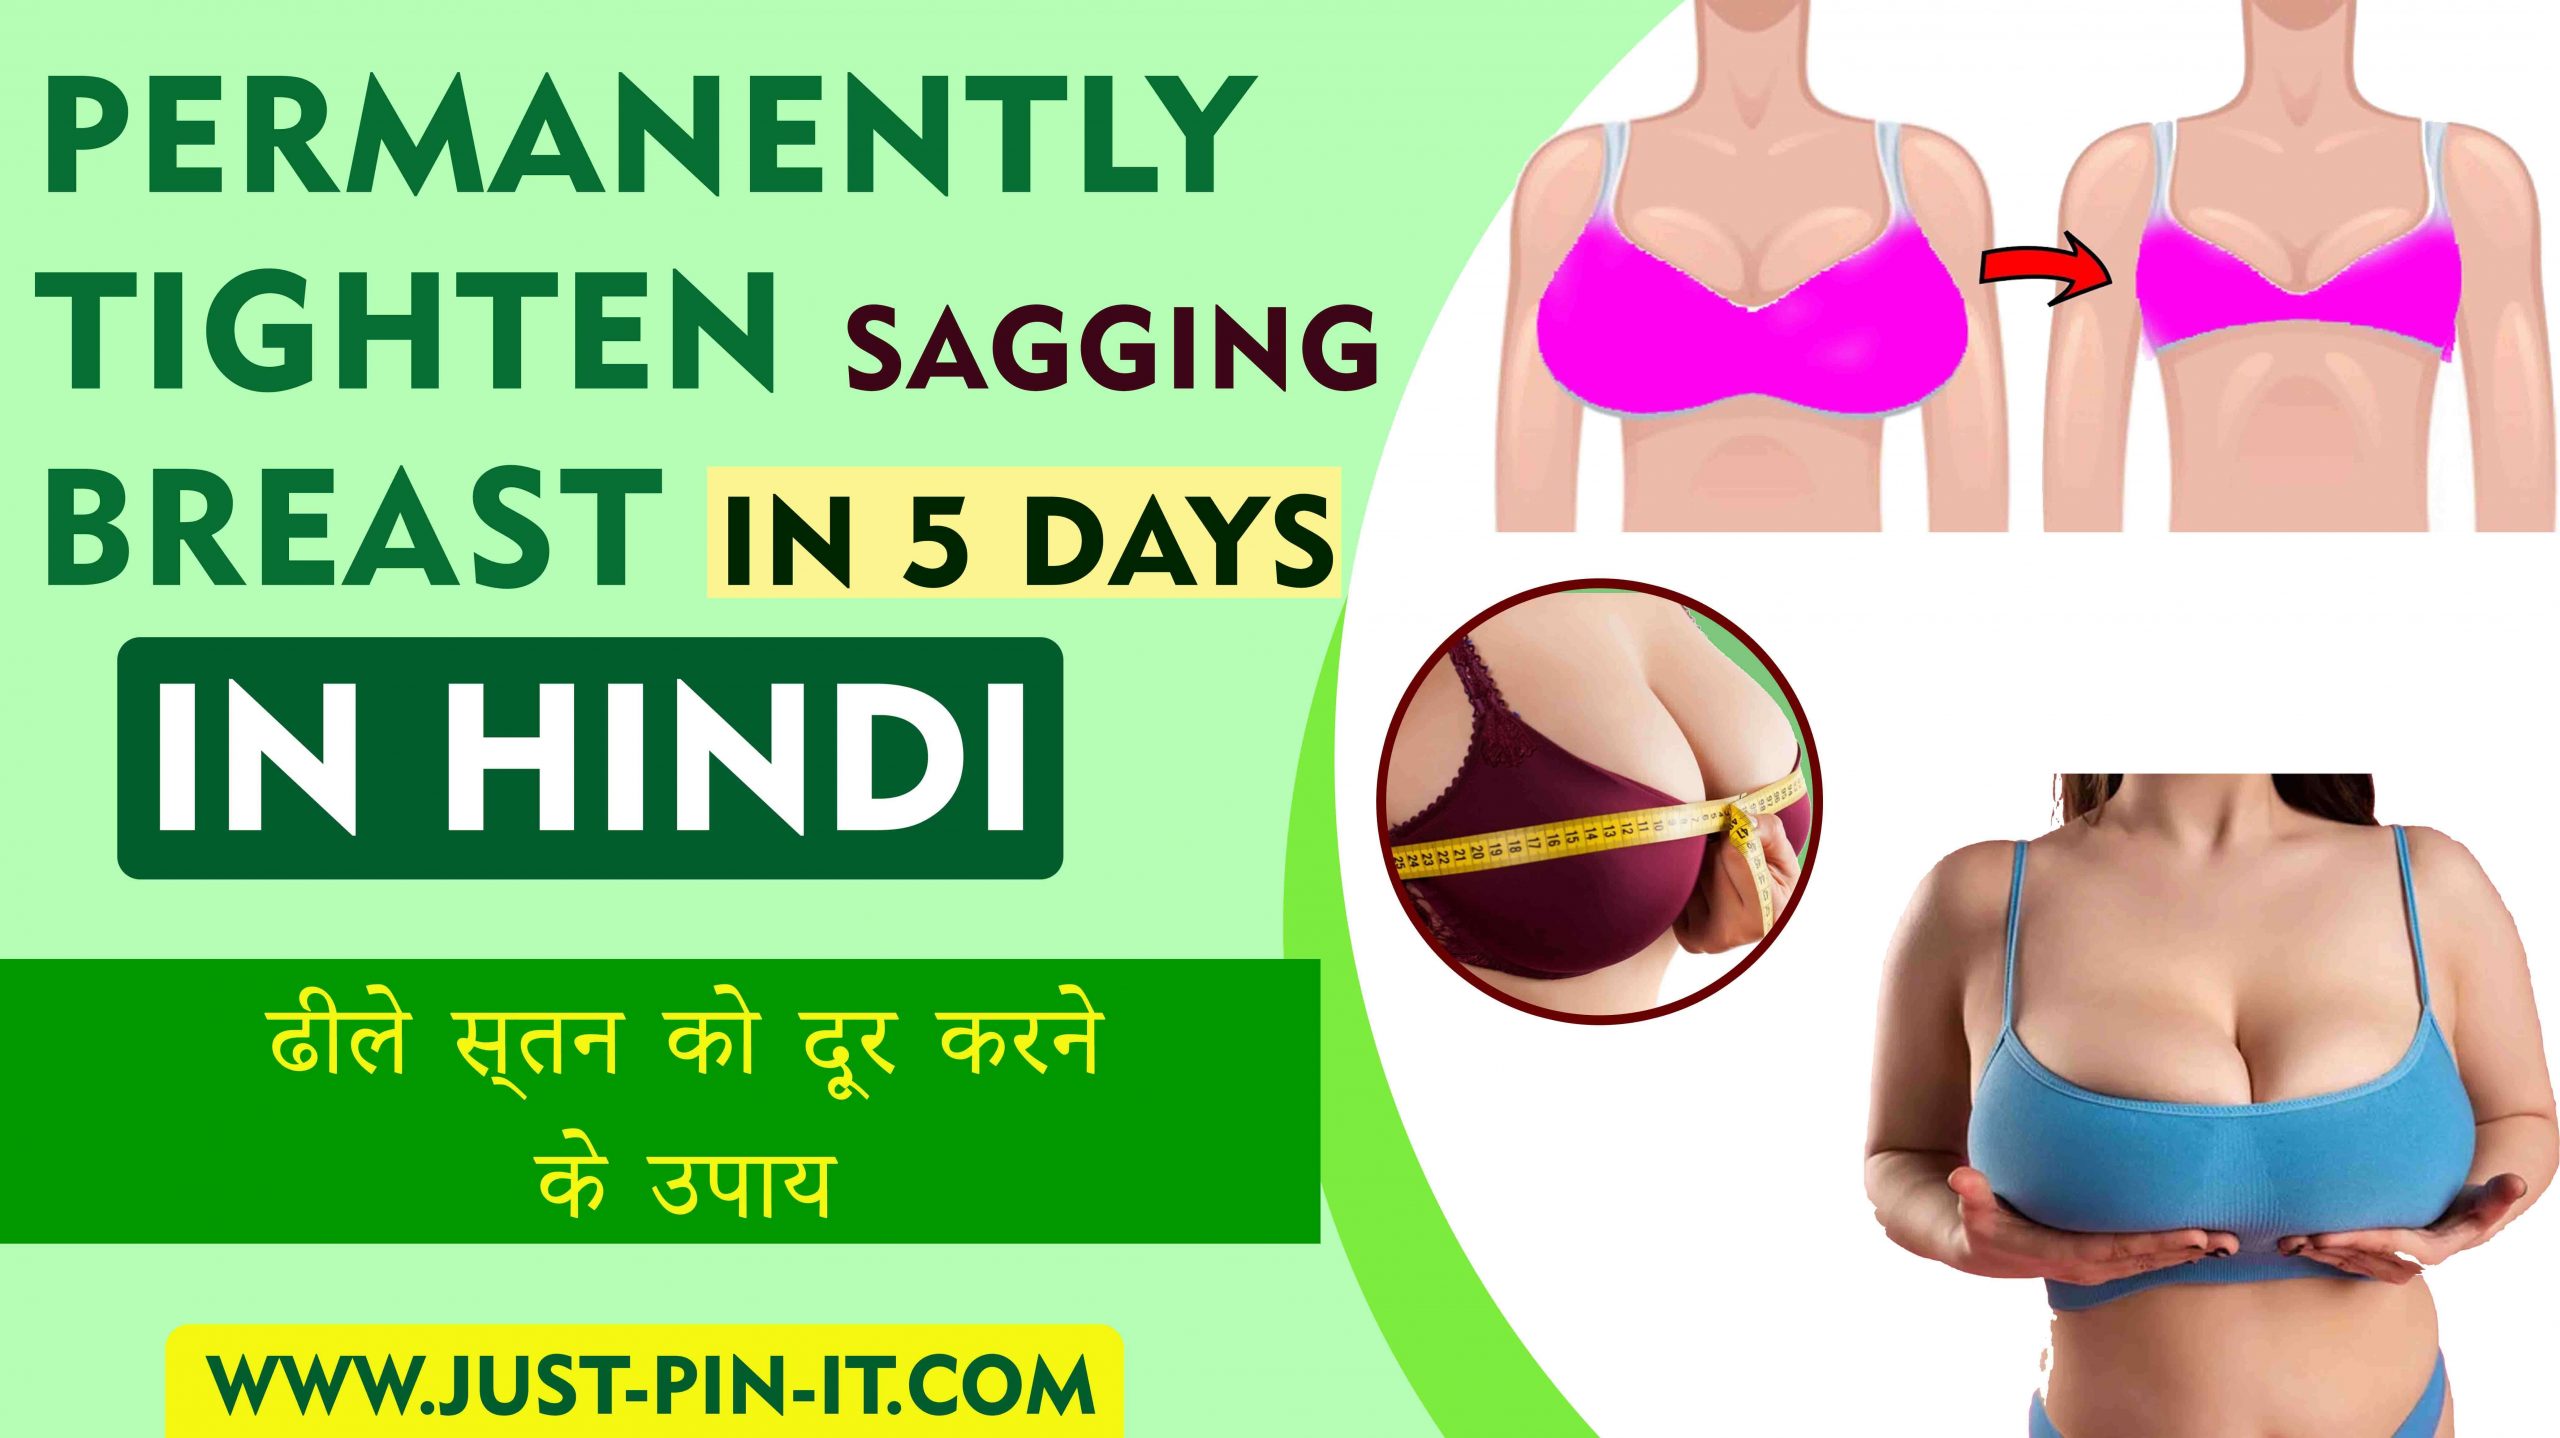 Permanently Tighten Sagging Breast in 5 Days in Hindi – ब्रेस्ट ग्रोथ टिप्स